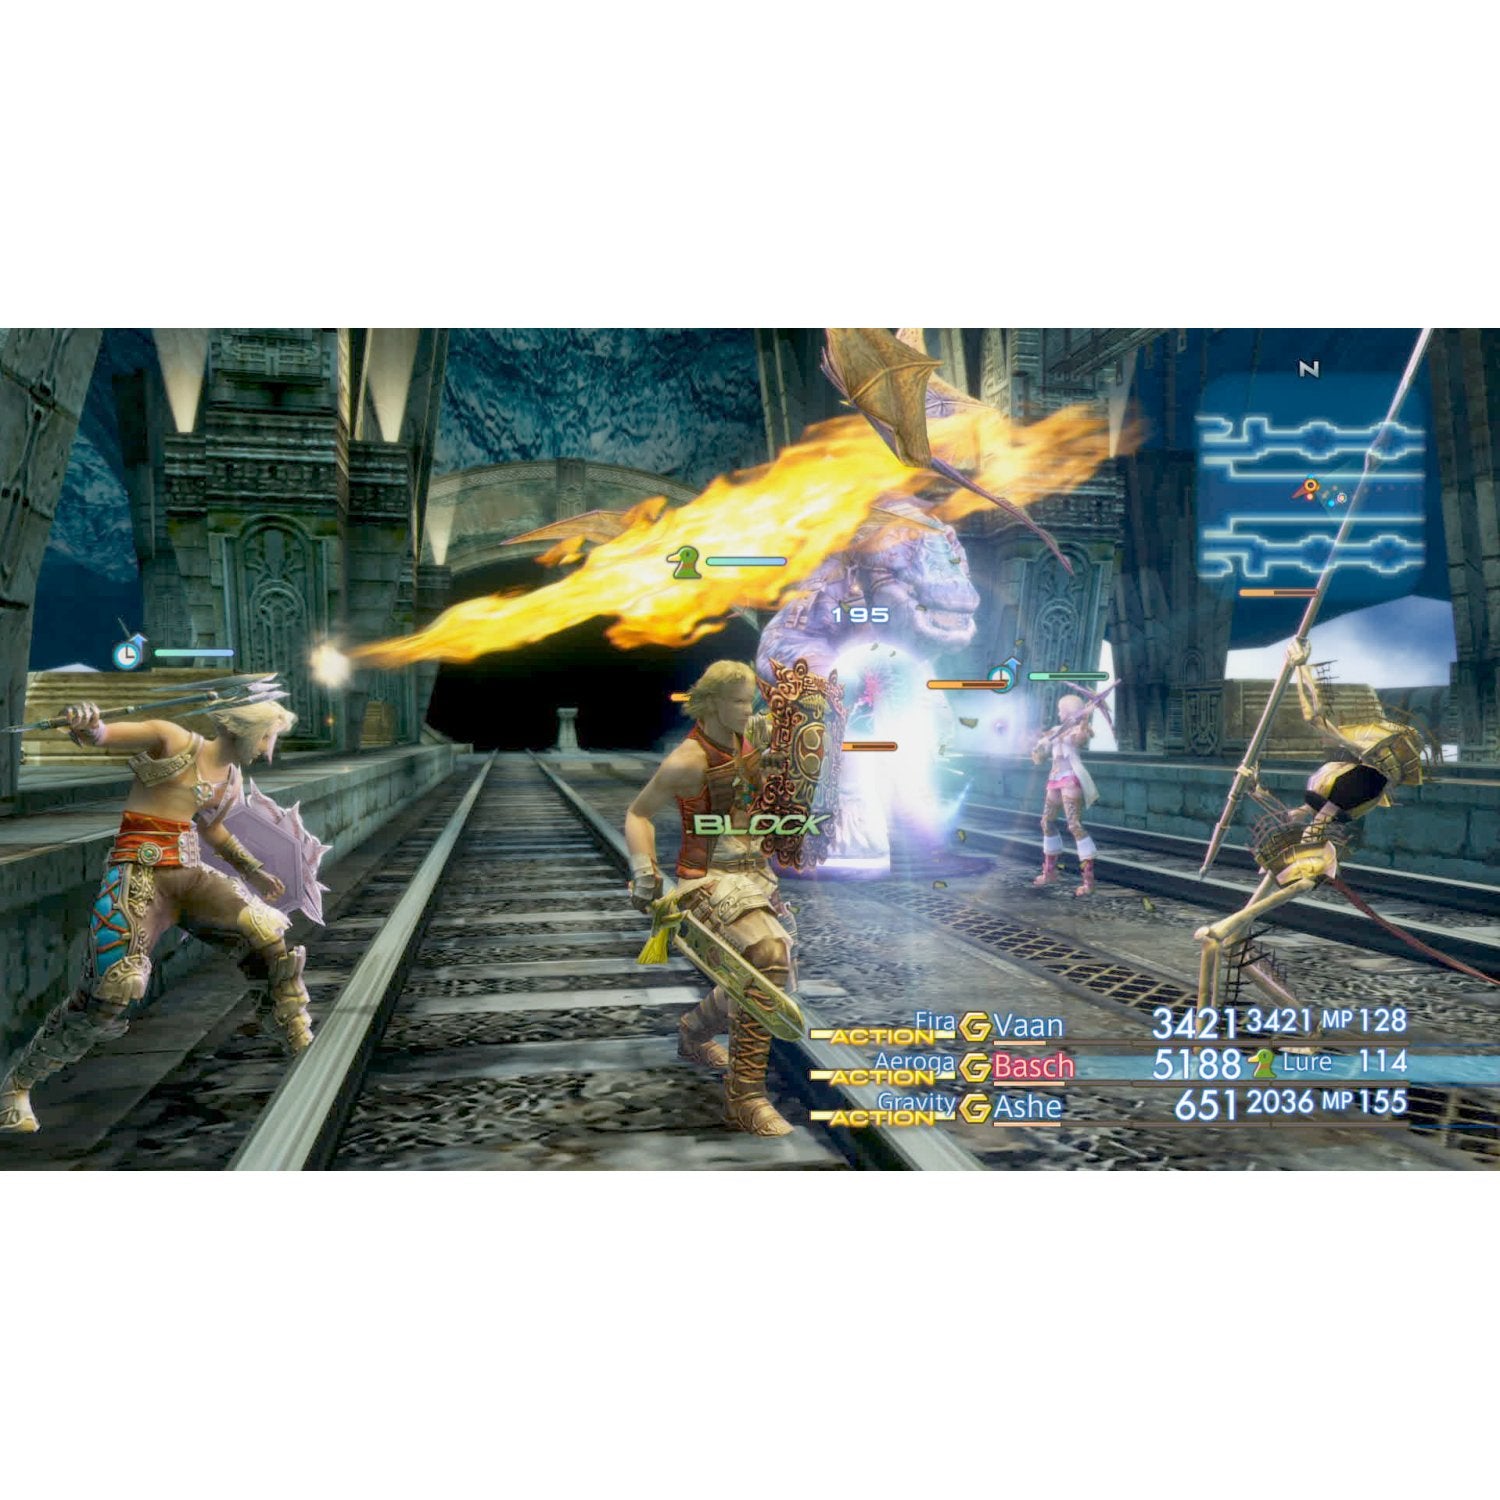 PS4 Final Fantasy XII: The Zodiac Age